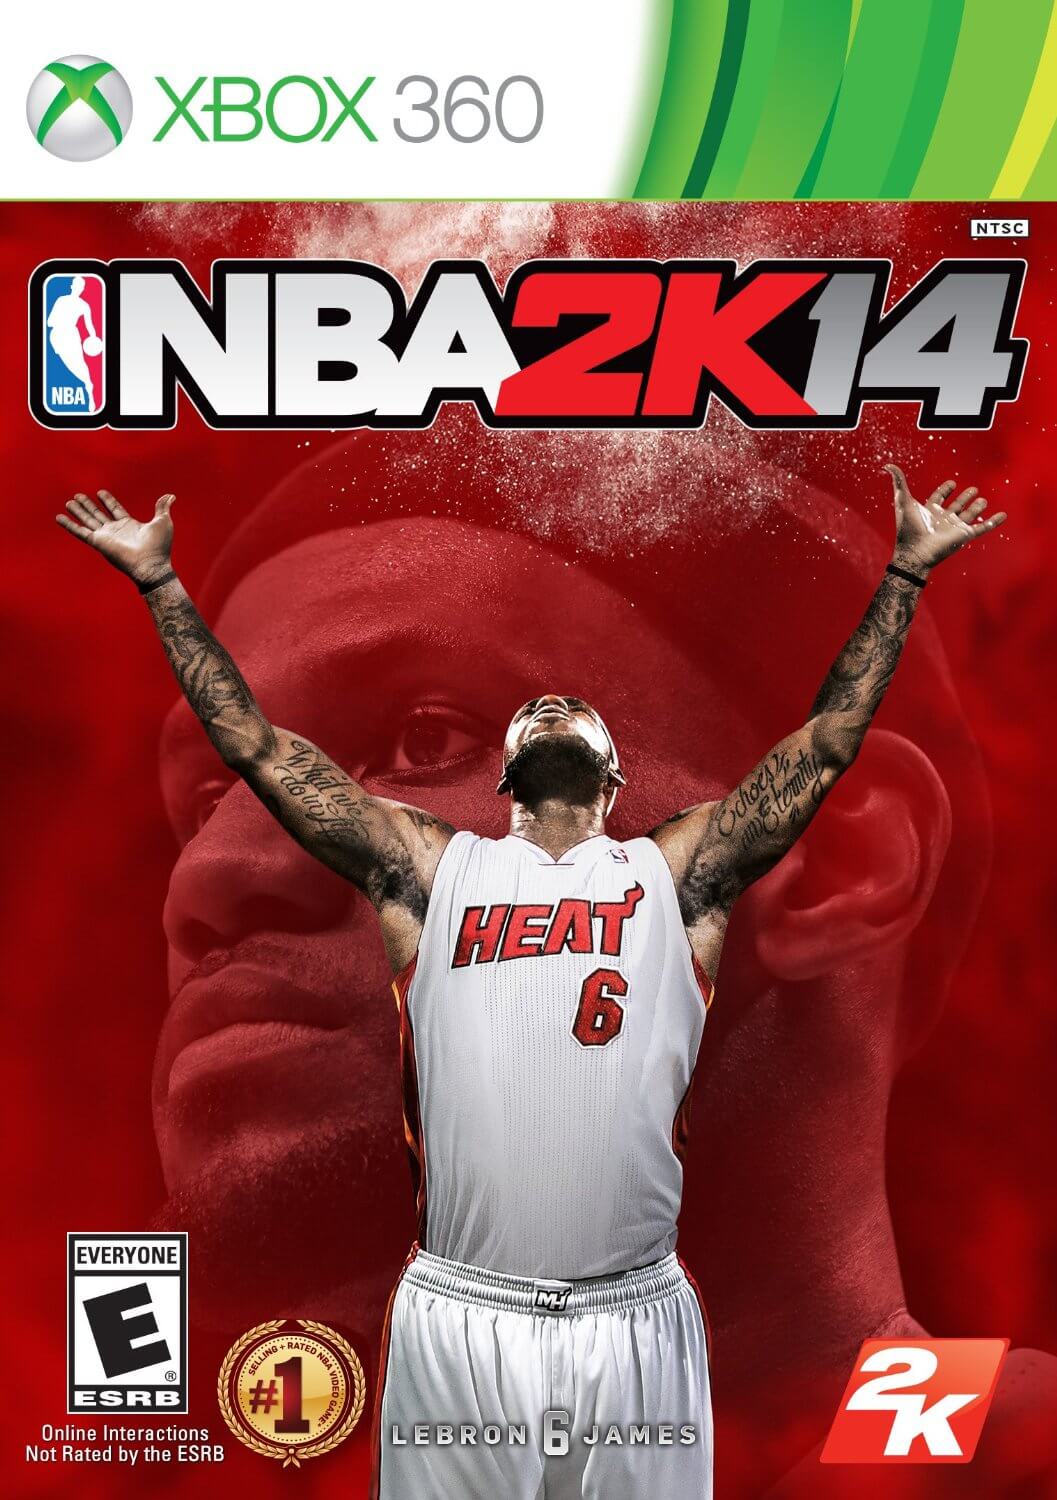 Joc Xbox 360 NBA 2K14